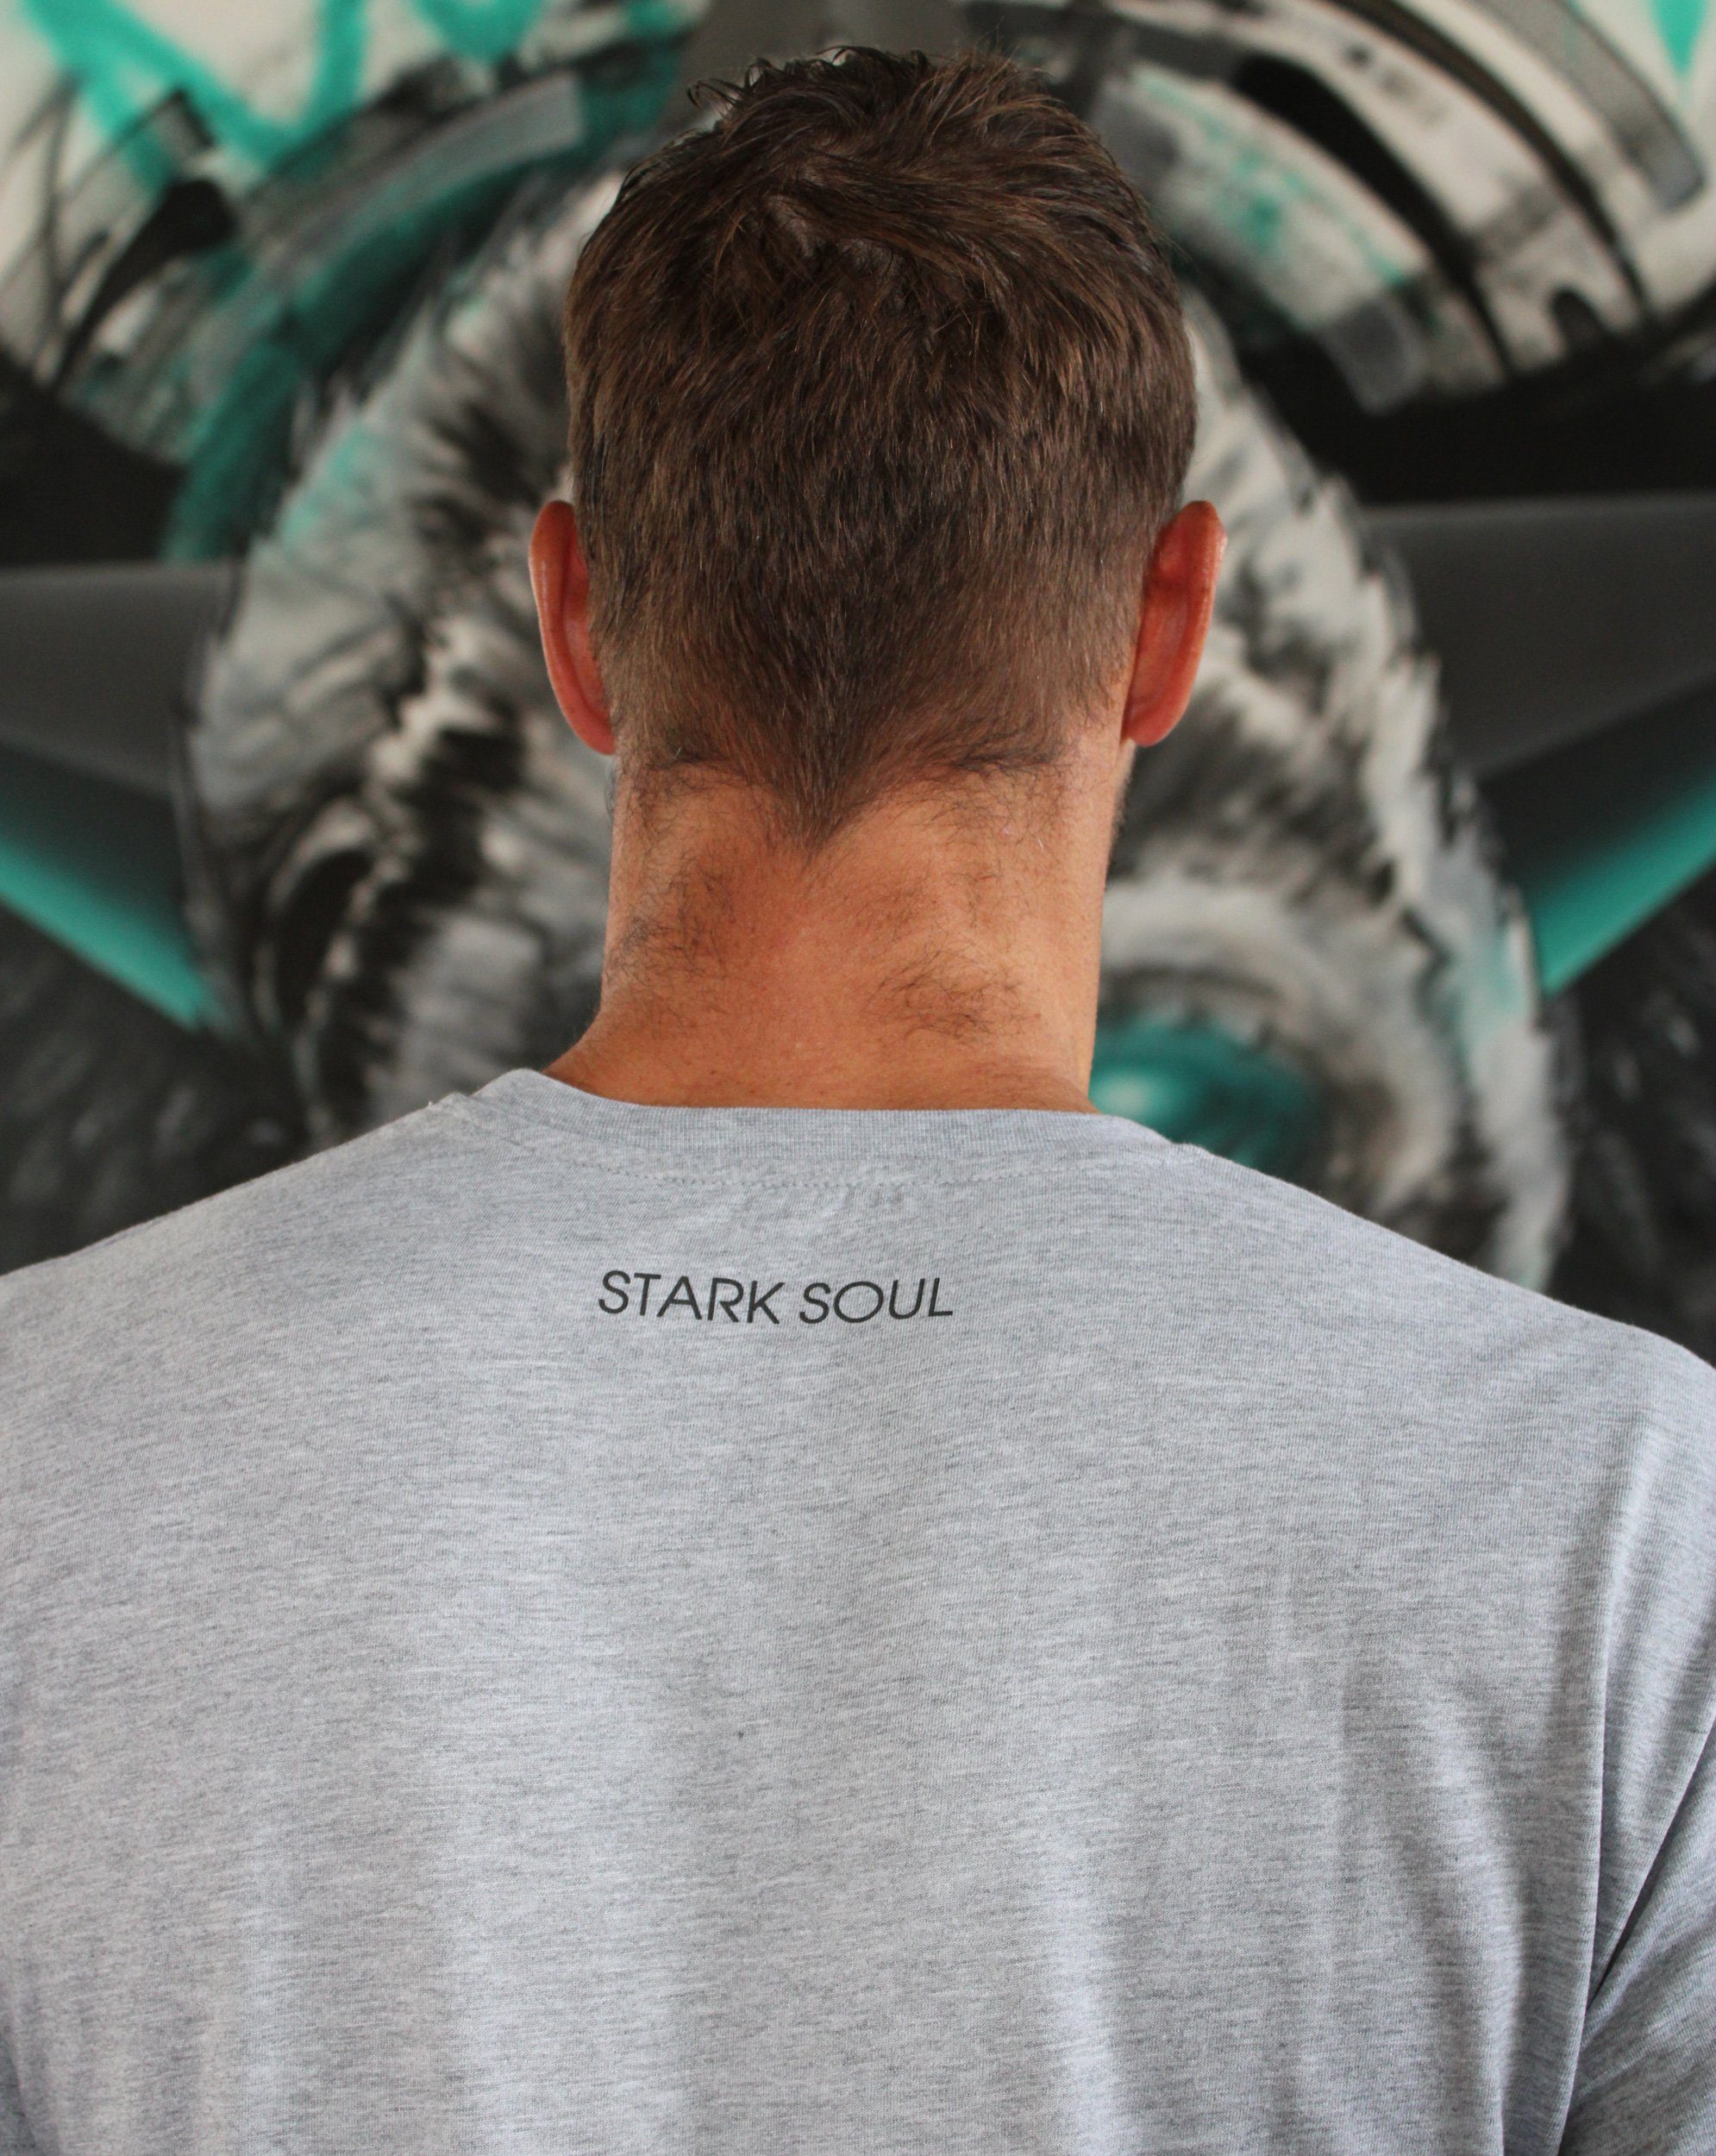 Soul® Melange Stark Logo mit T-Shirt Grau T-Shirt Casual Cotton